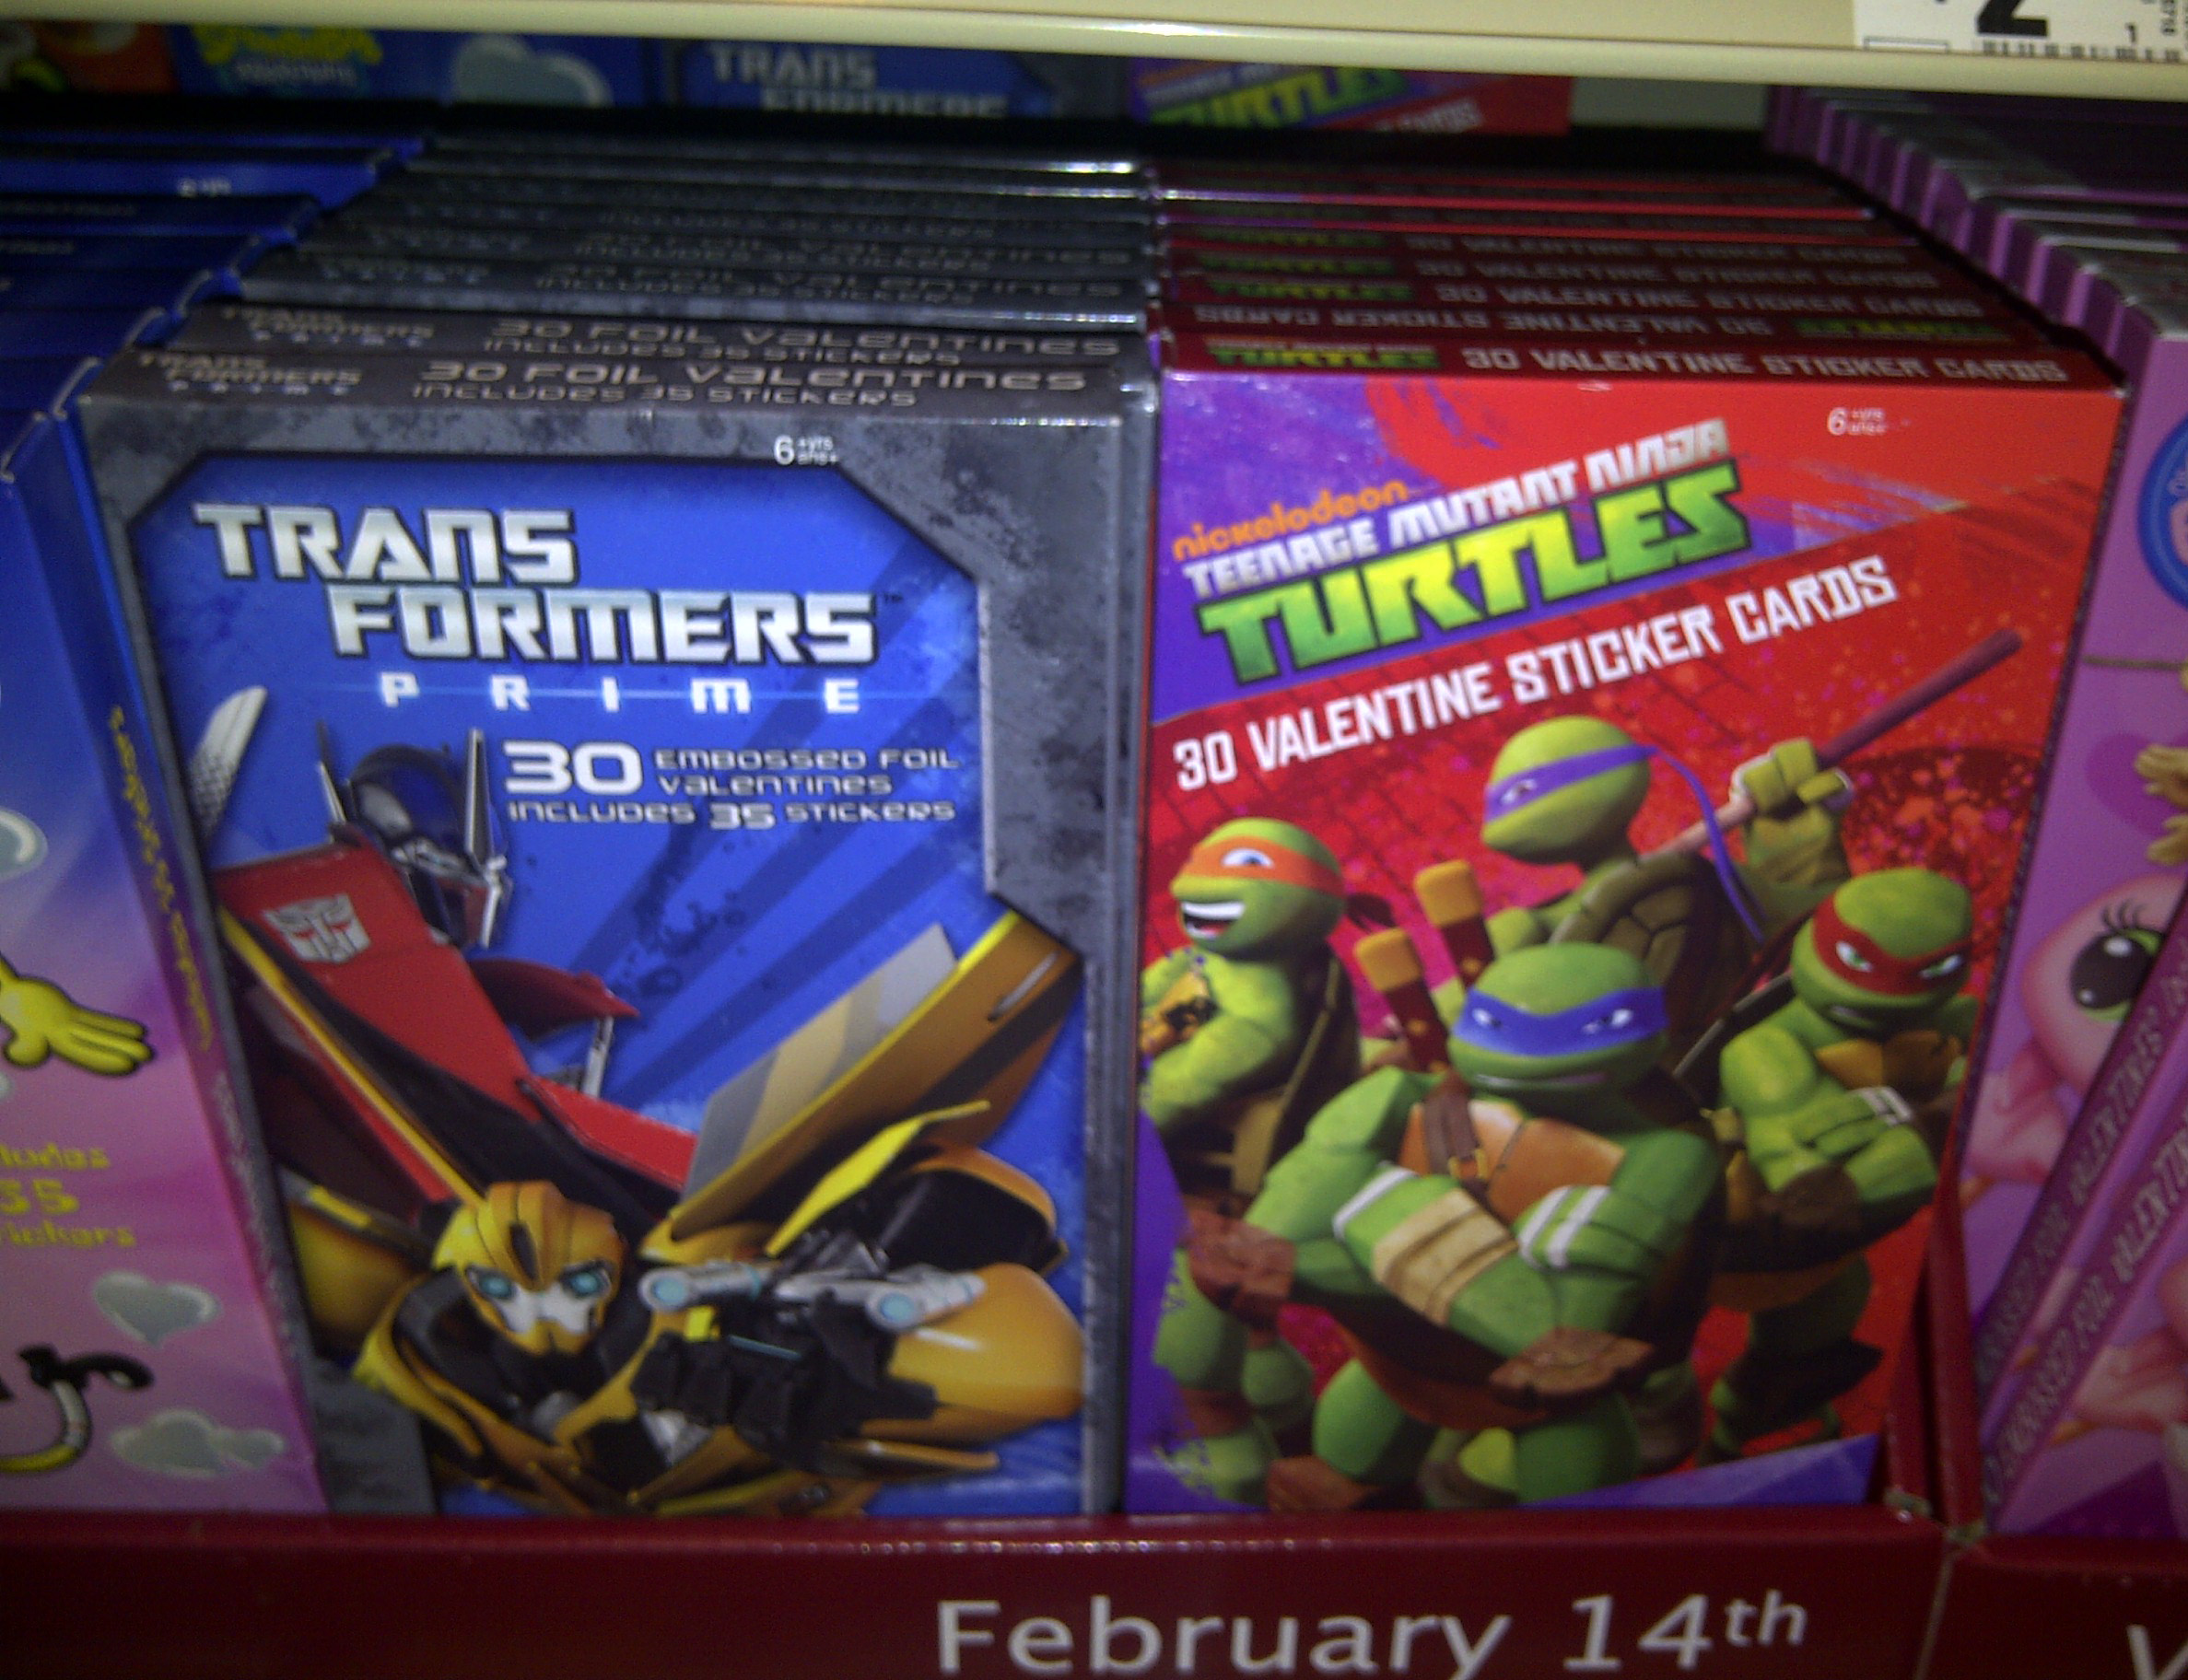 Transformers Prime and Teenage Mutant Ninja Turtles Valentine’s Day